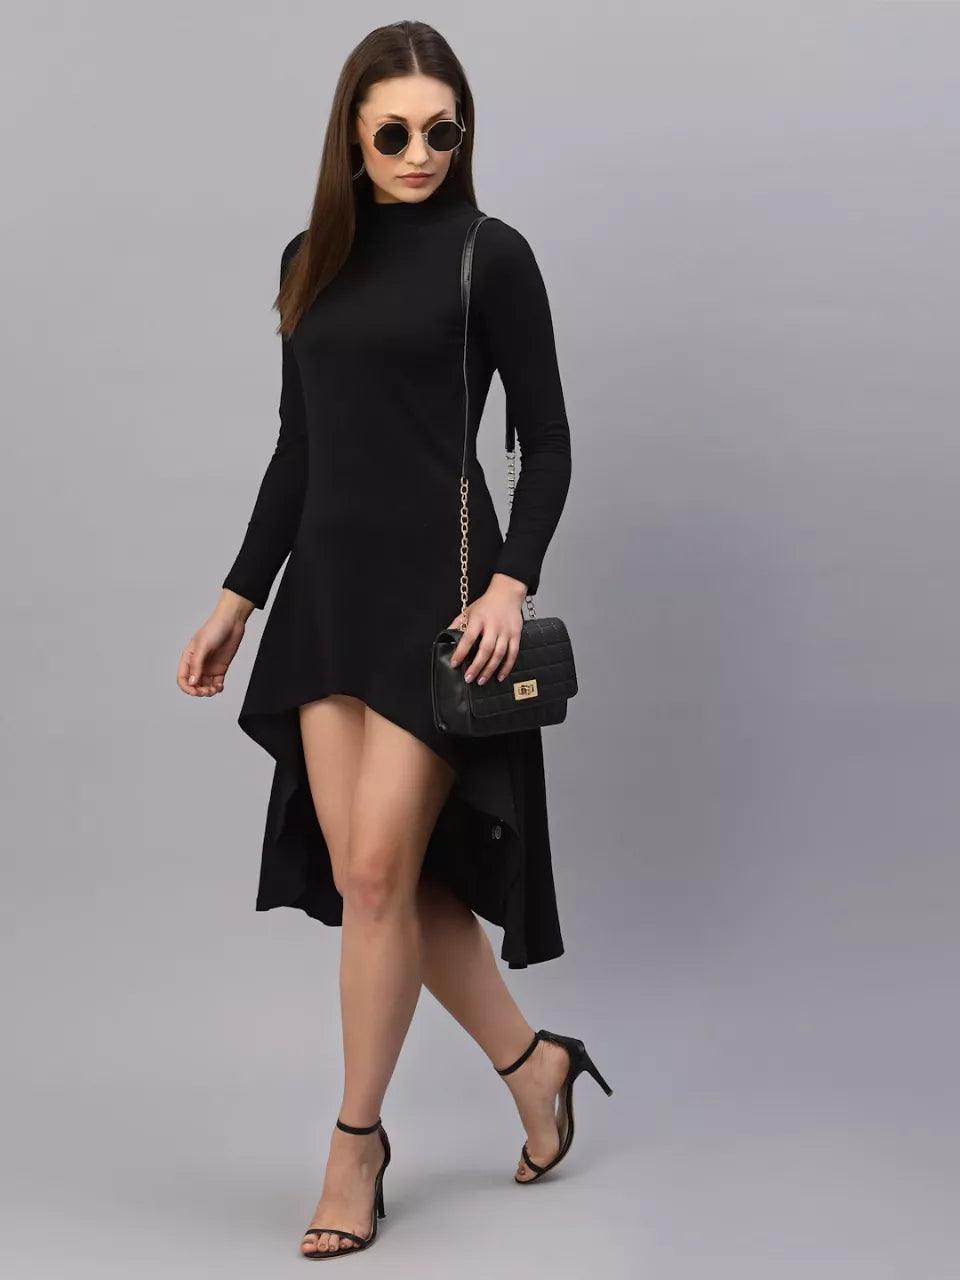 RIGO Cotton Plain / Solid Asymmetric Dress for Women_Medium - ShopIMO